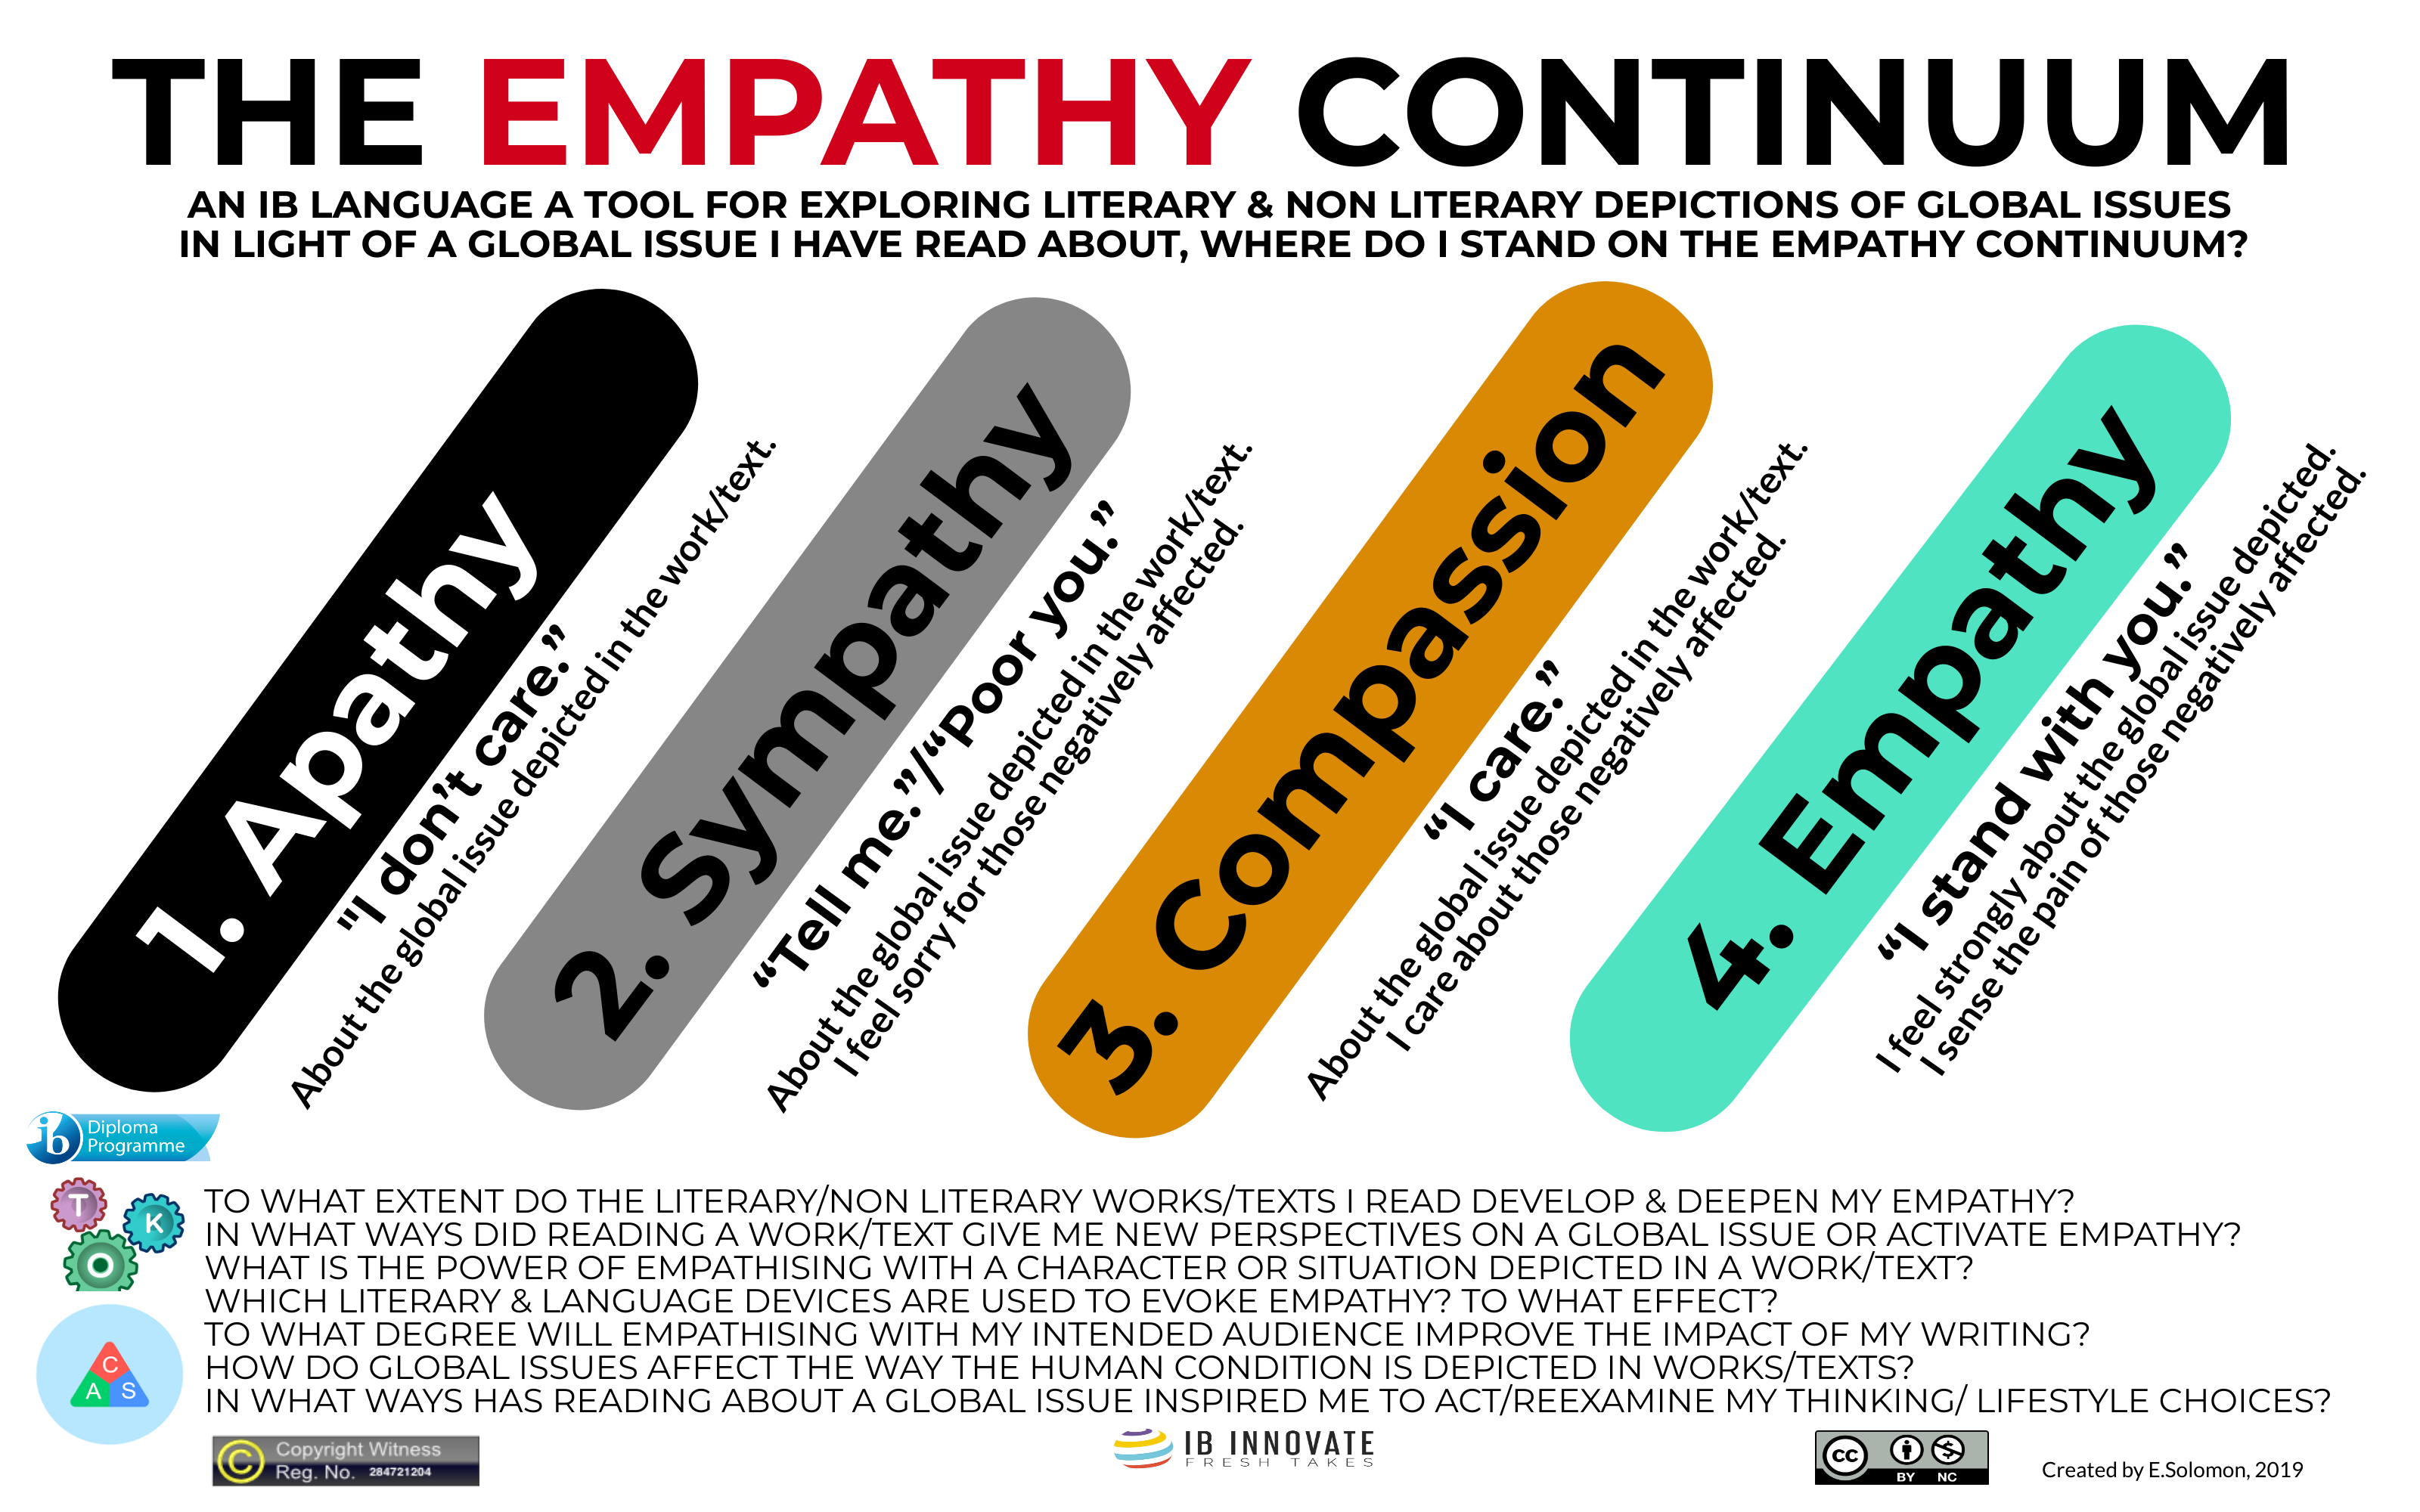 empathy vs sympathy brene brown